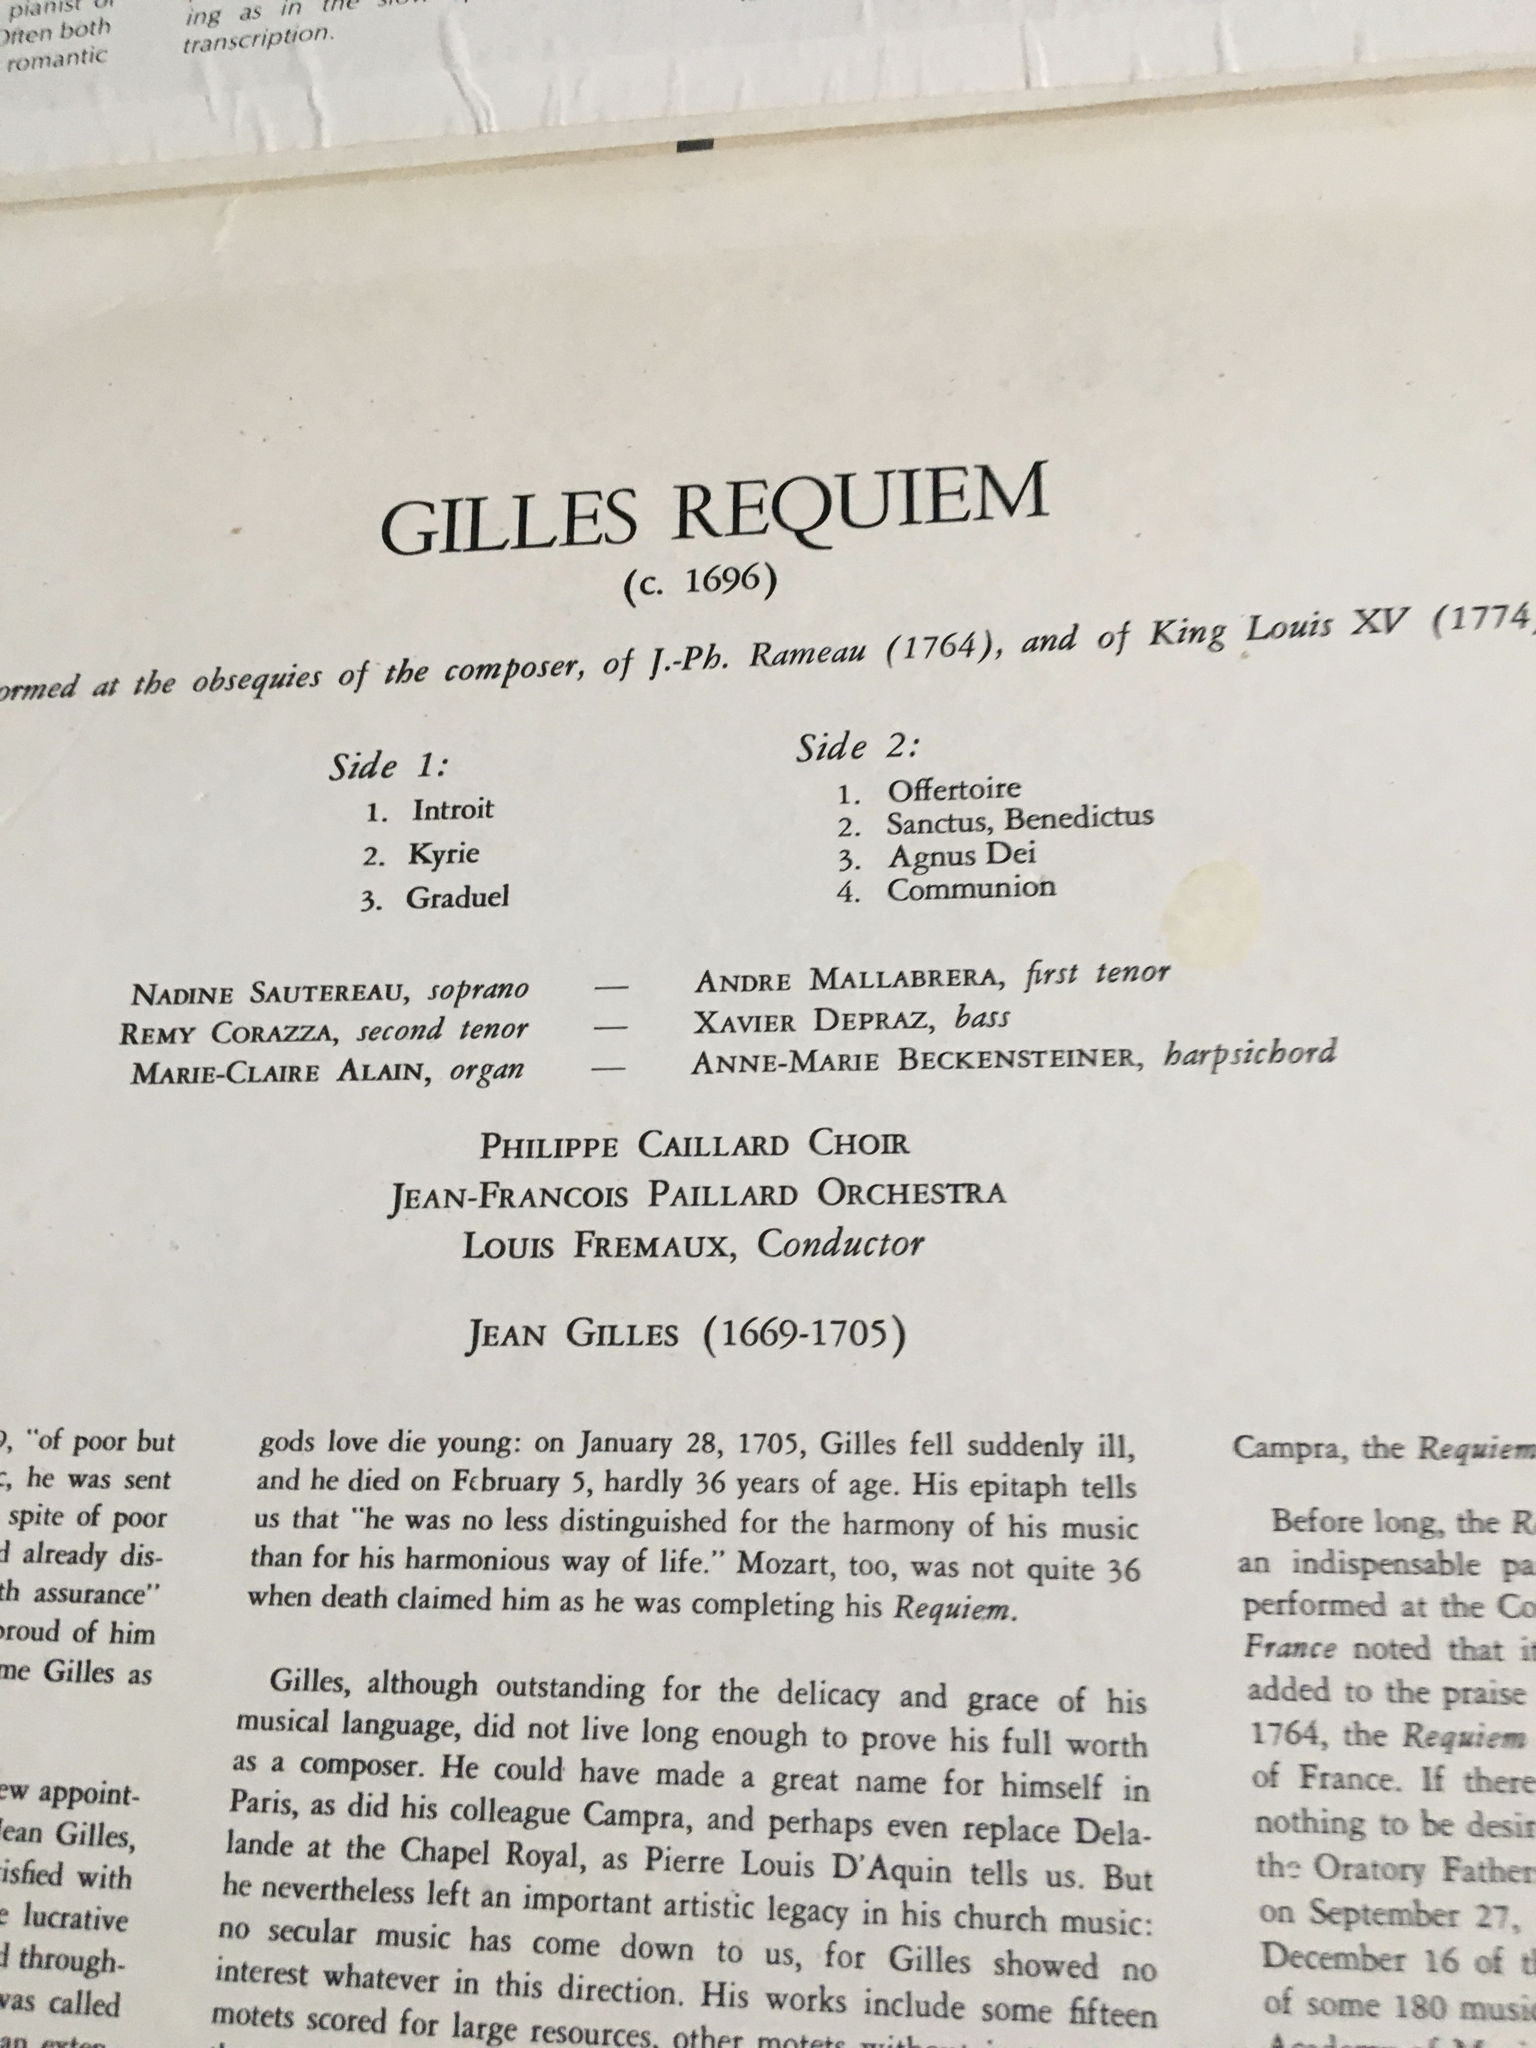 MHS Gilels lot of 3 Lp records  Carnegie hall Requiem M... 2